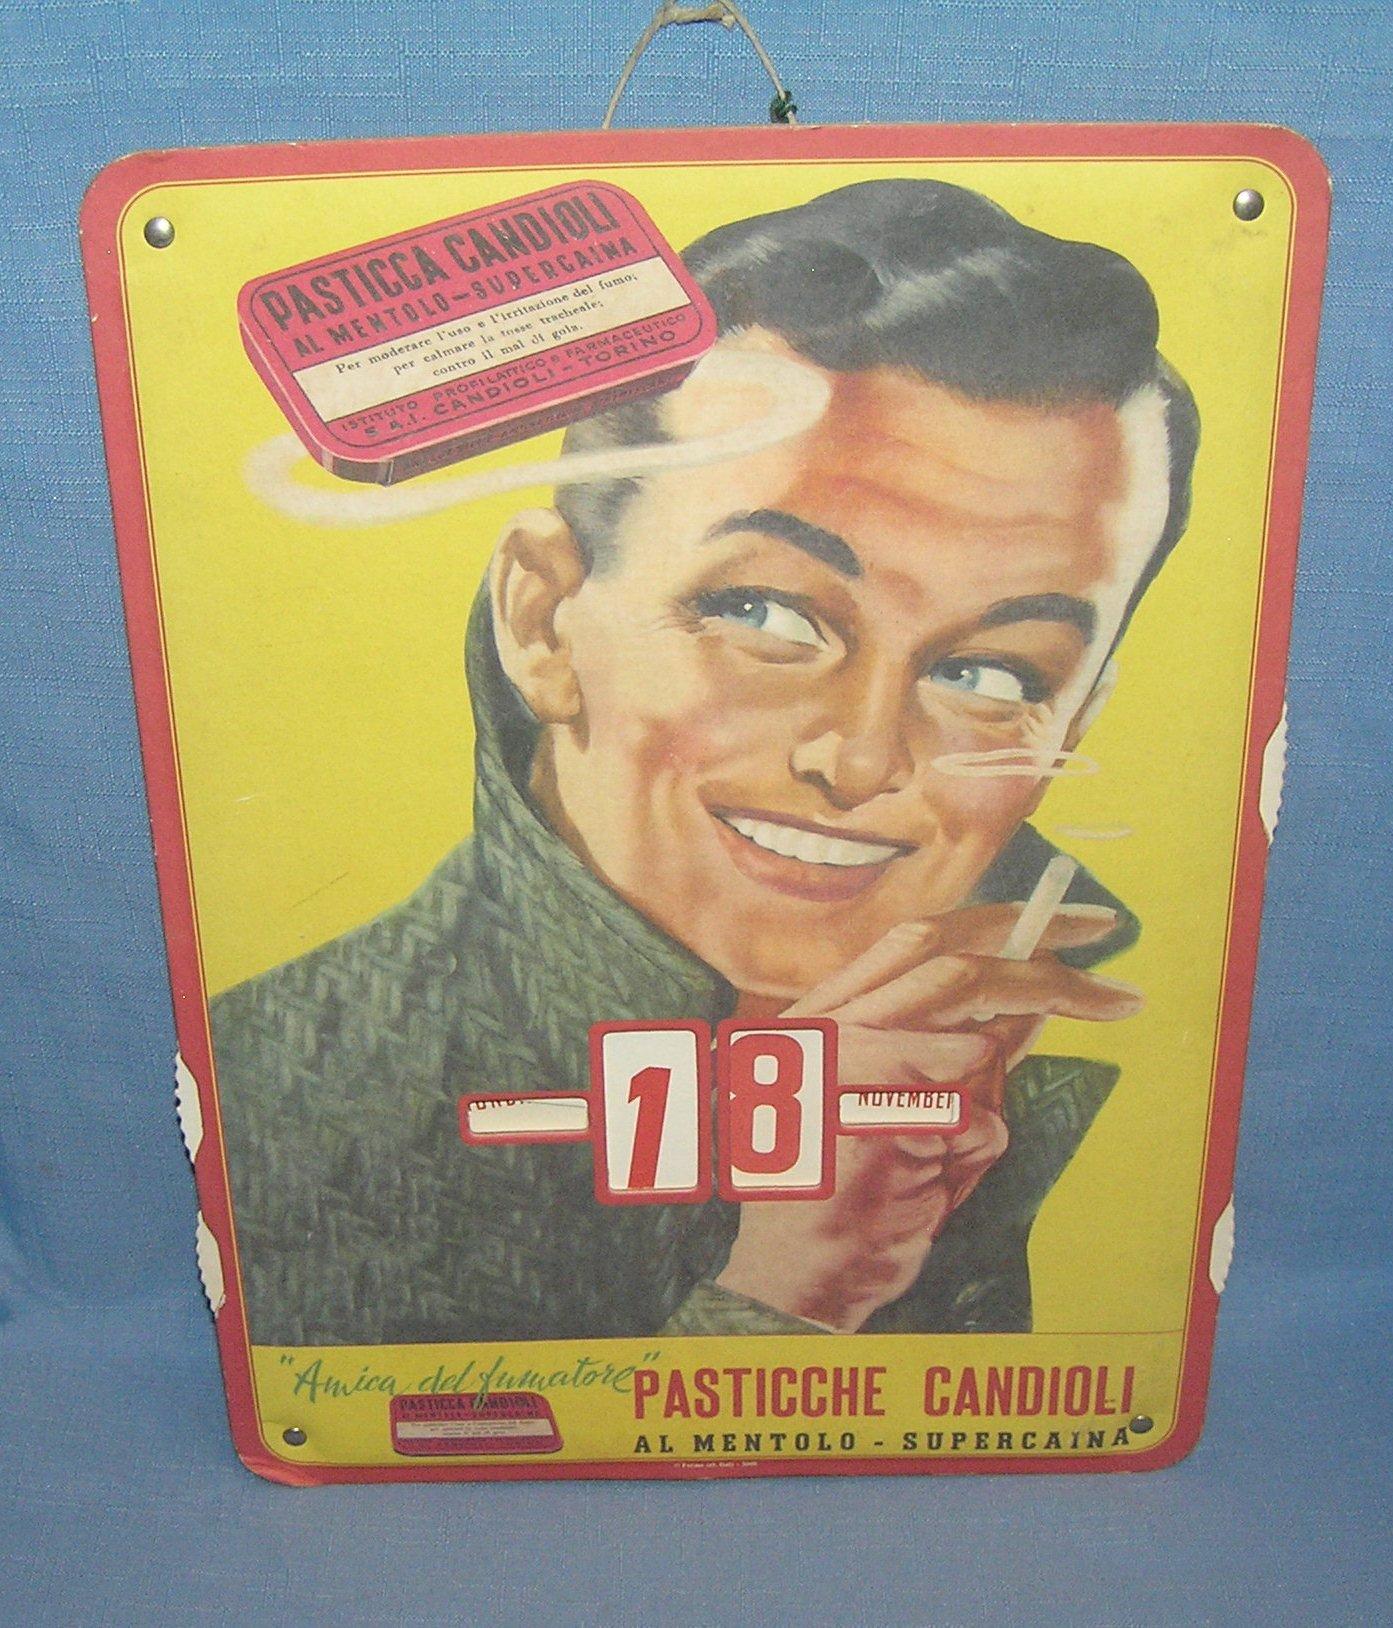 Cigarette advertising calendar for Ital. cigarettes